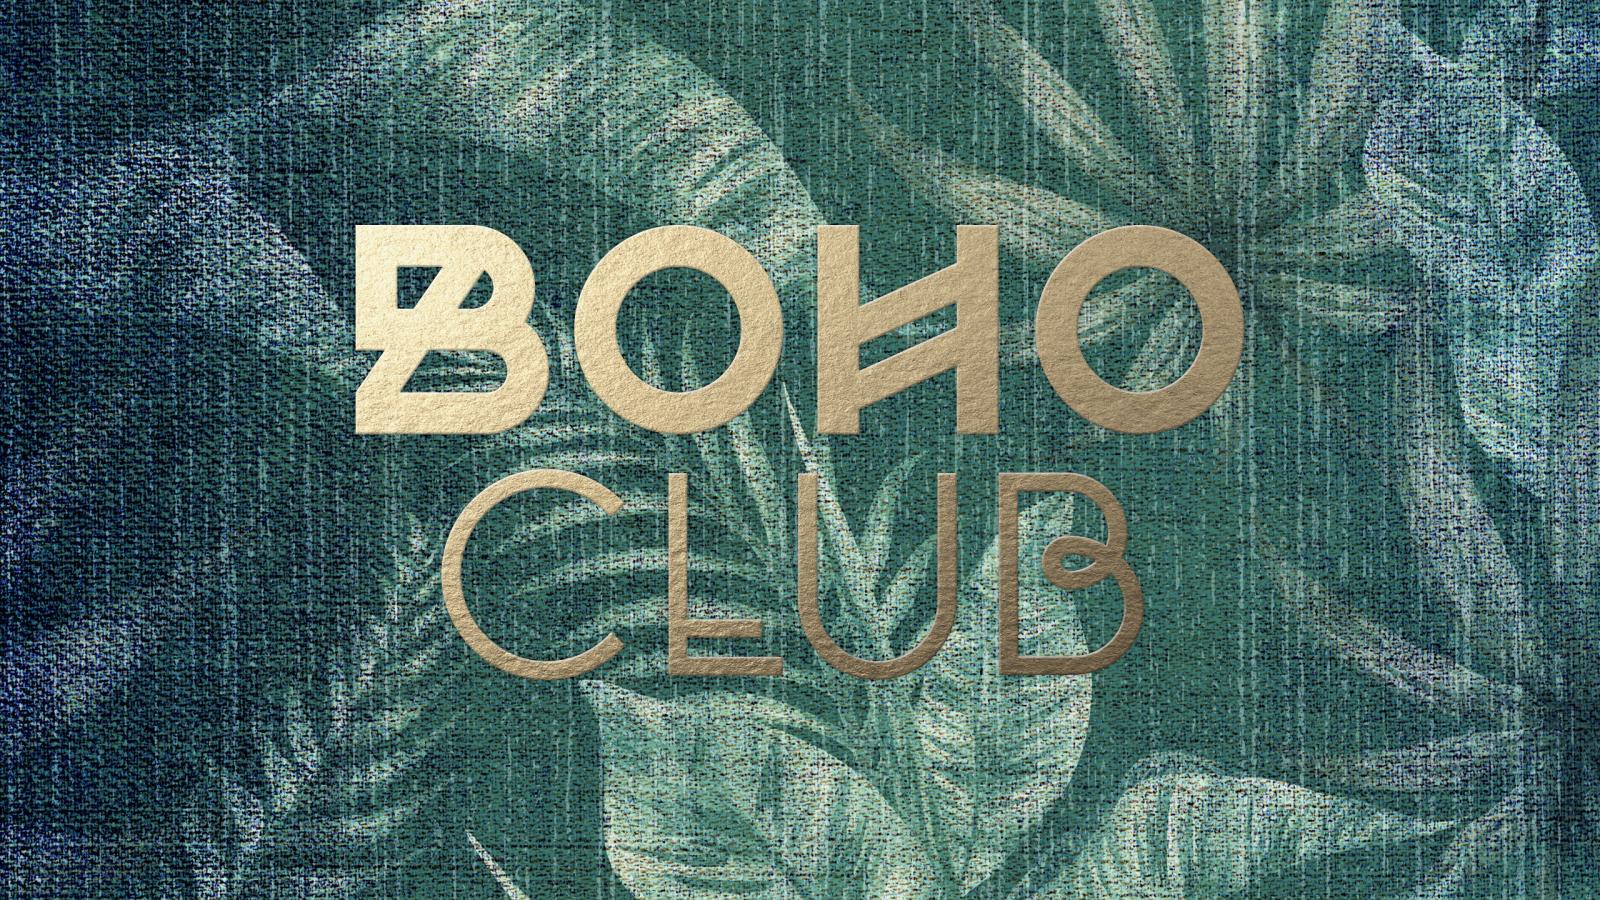 BoHO Club Logo on green background